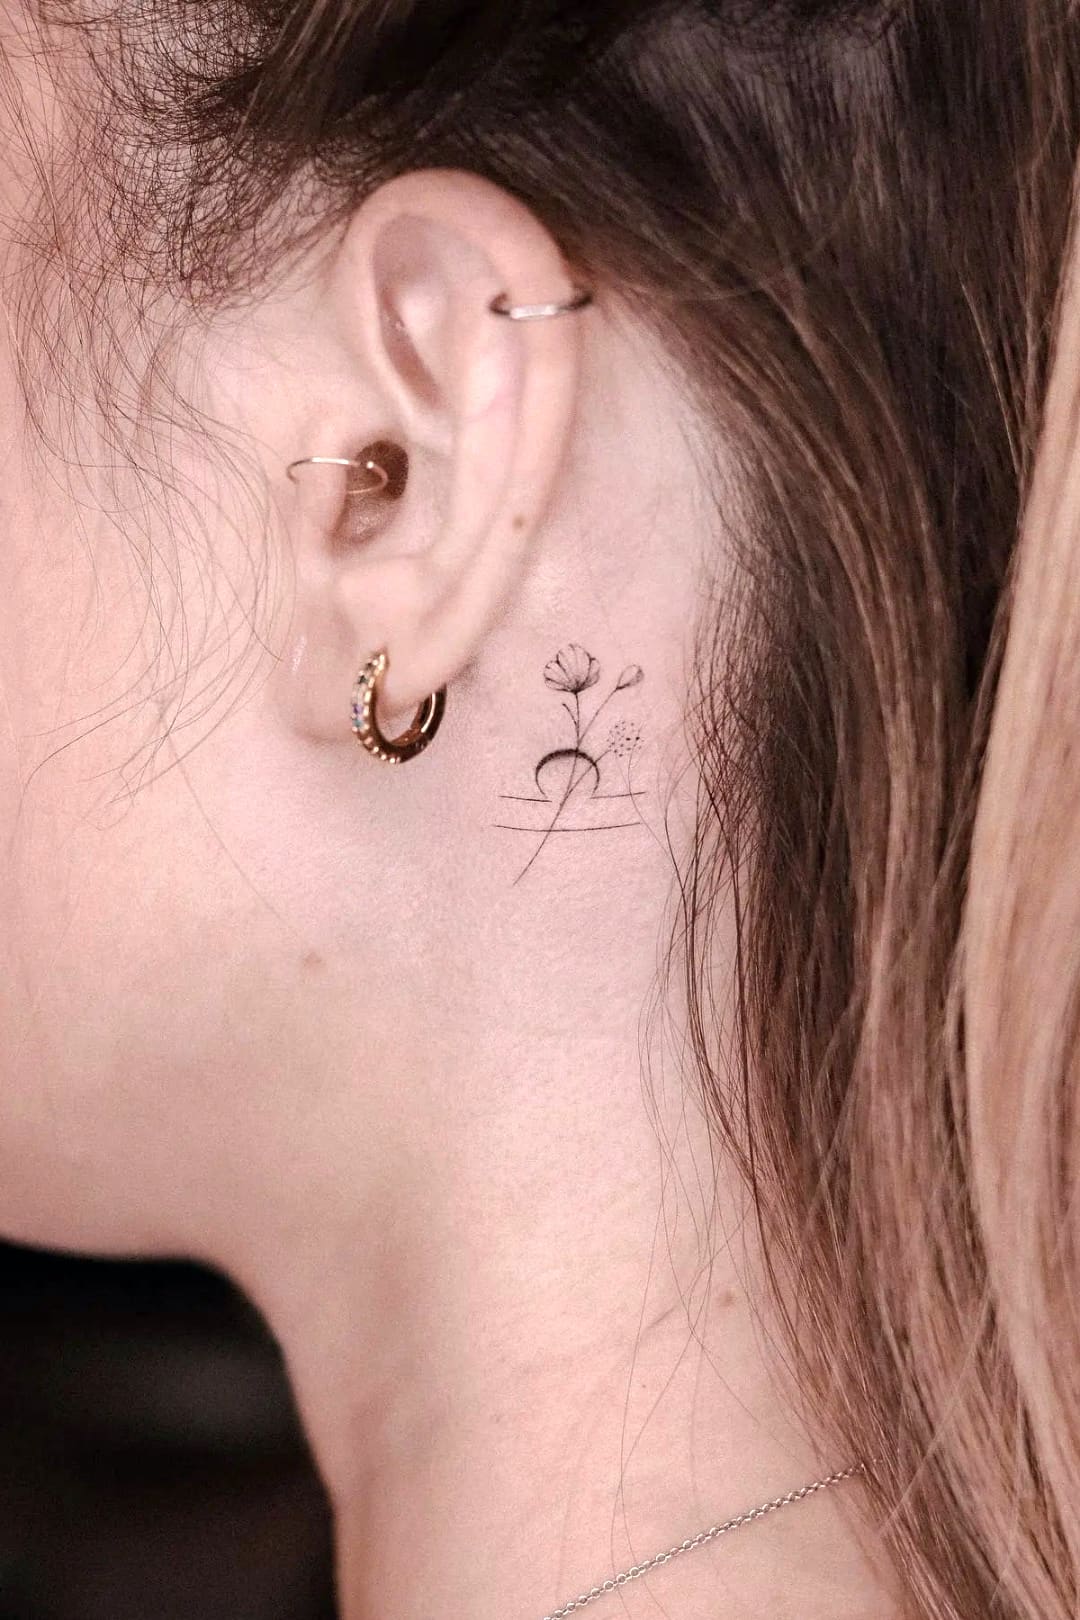 Libra tattoo behind the ear